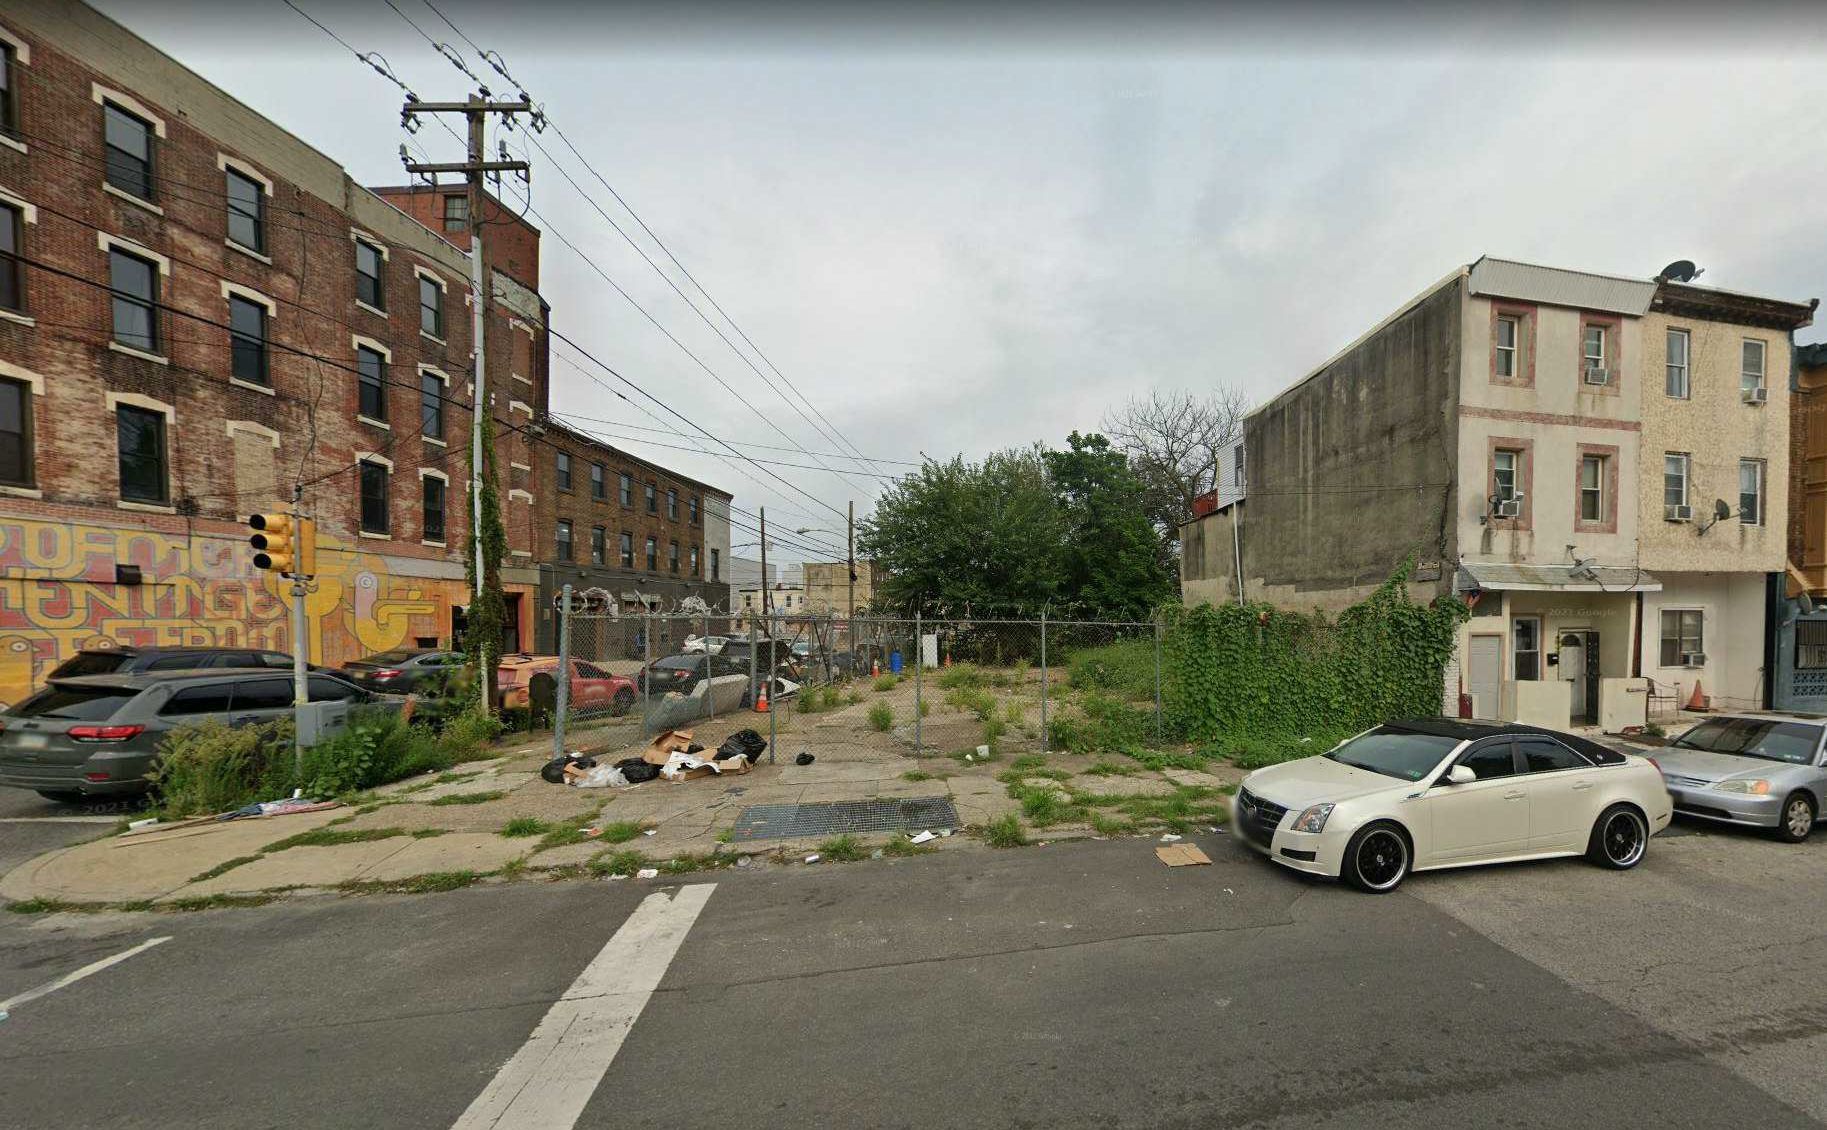 2059 Germantown Avenue. Existing site conditions. Credit: Plato Marinakos of Plato Studio via the City of Philadelphia